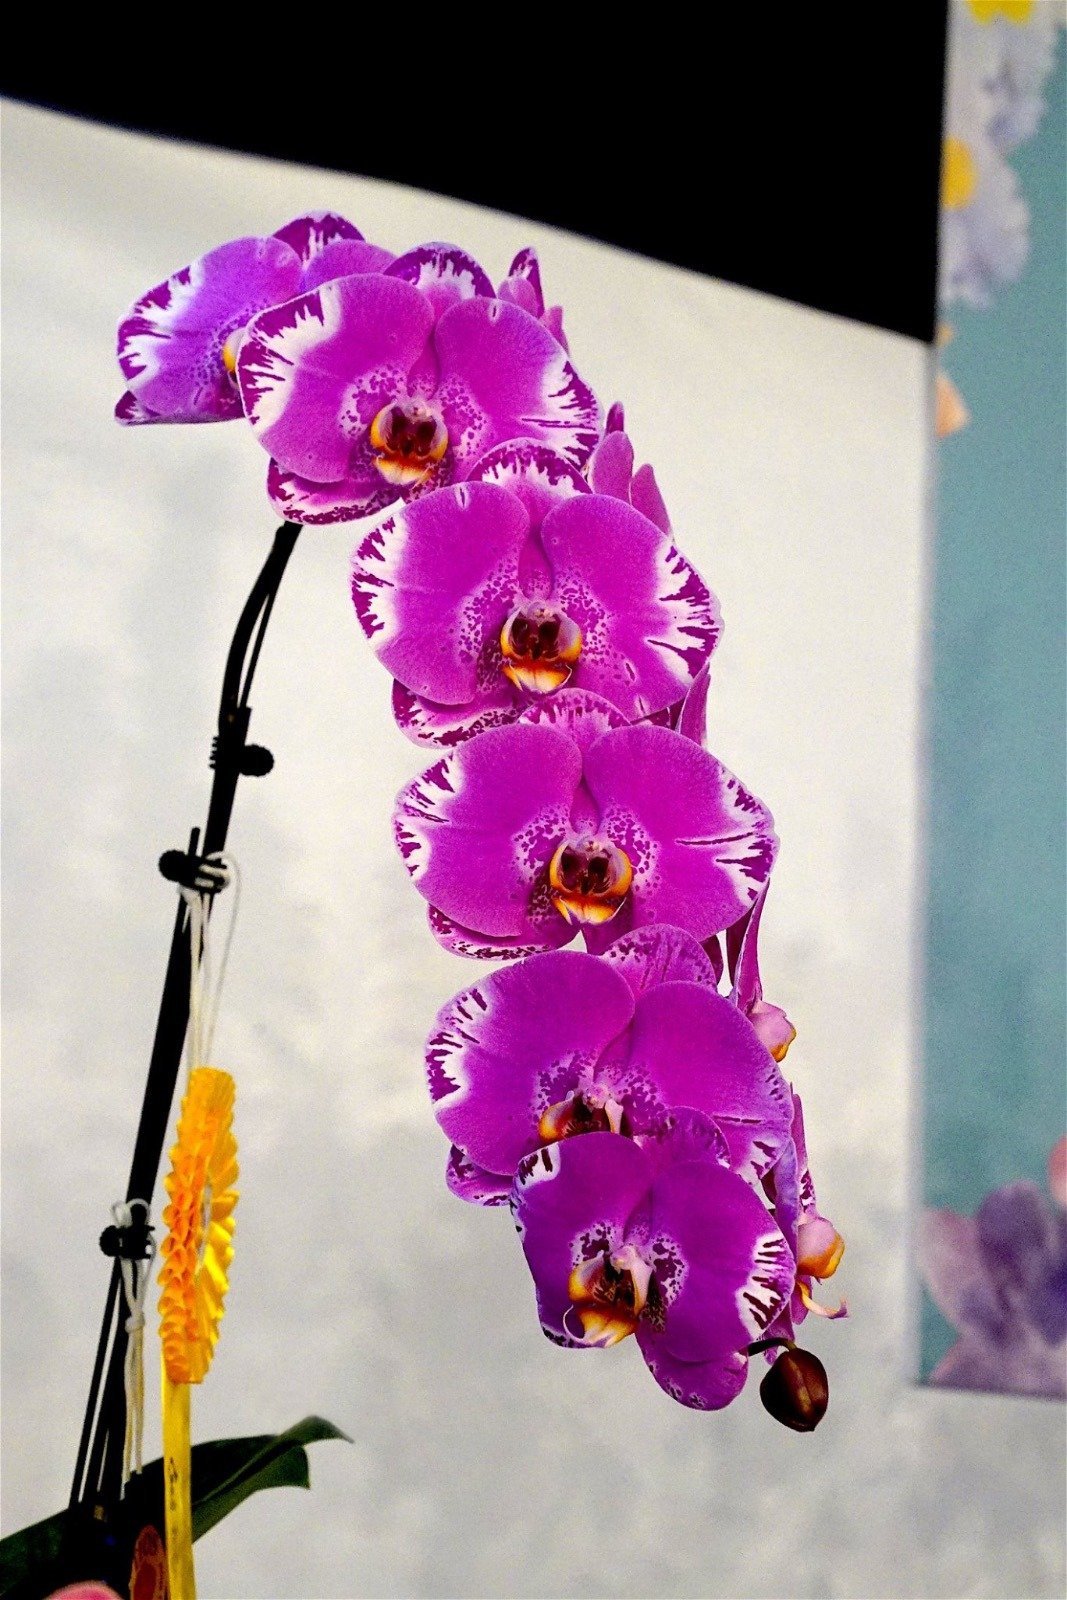 Phalaenopsis OX Spot Queen "OX 1460" AM/AOS